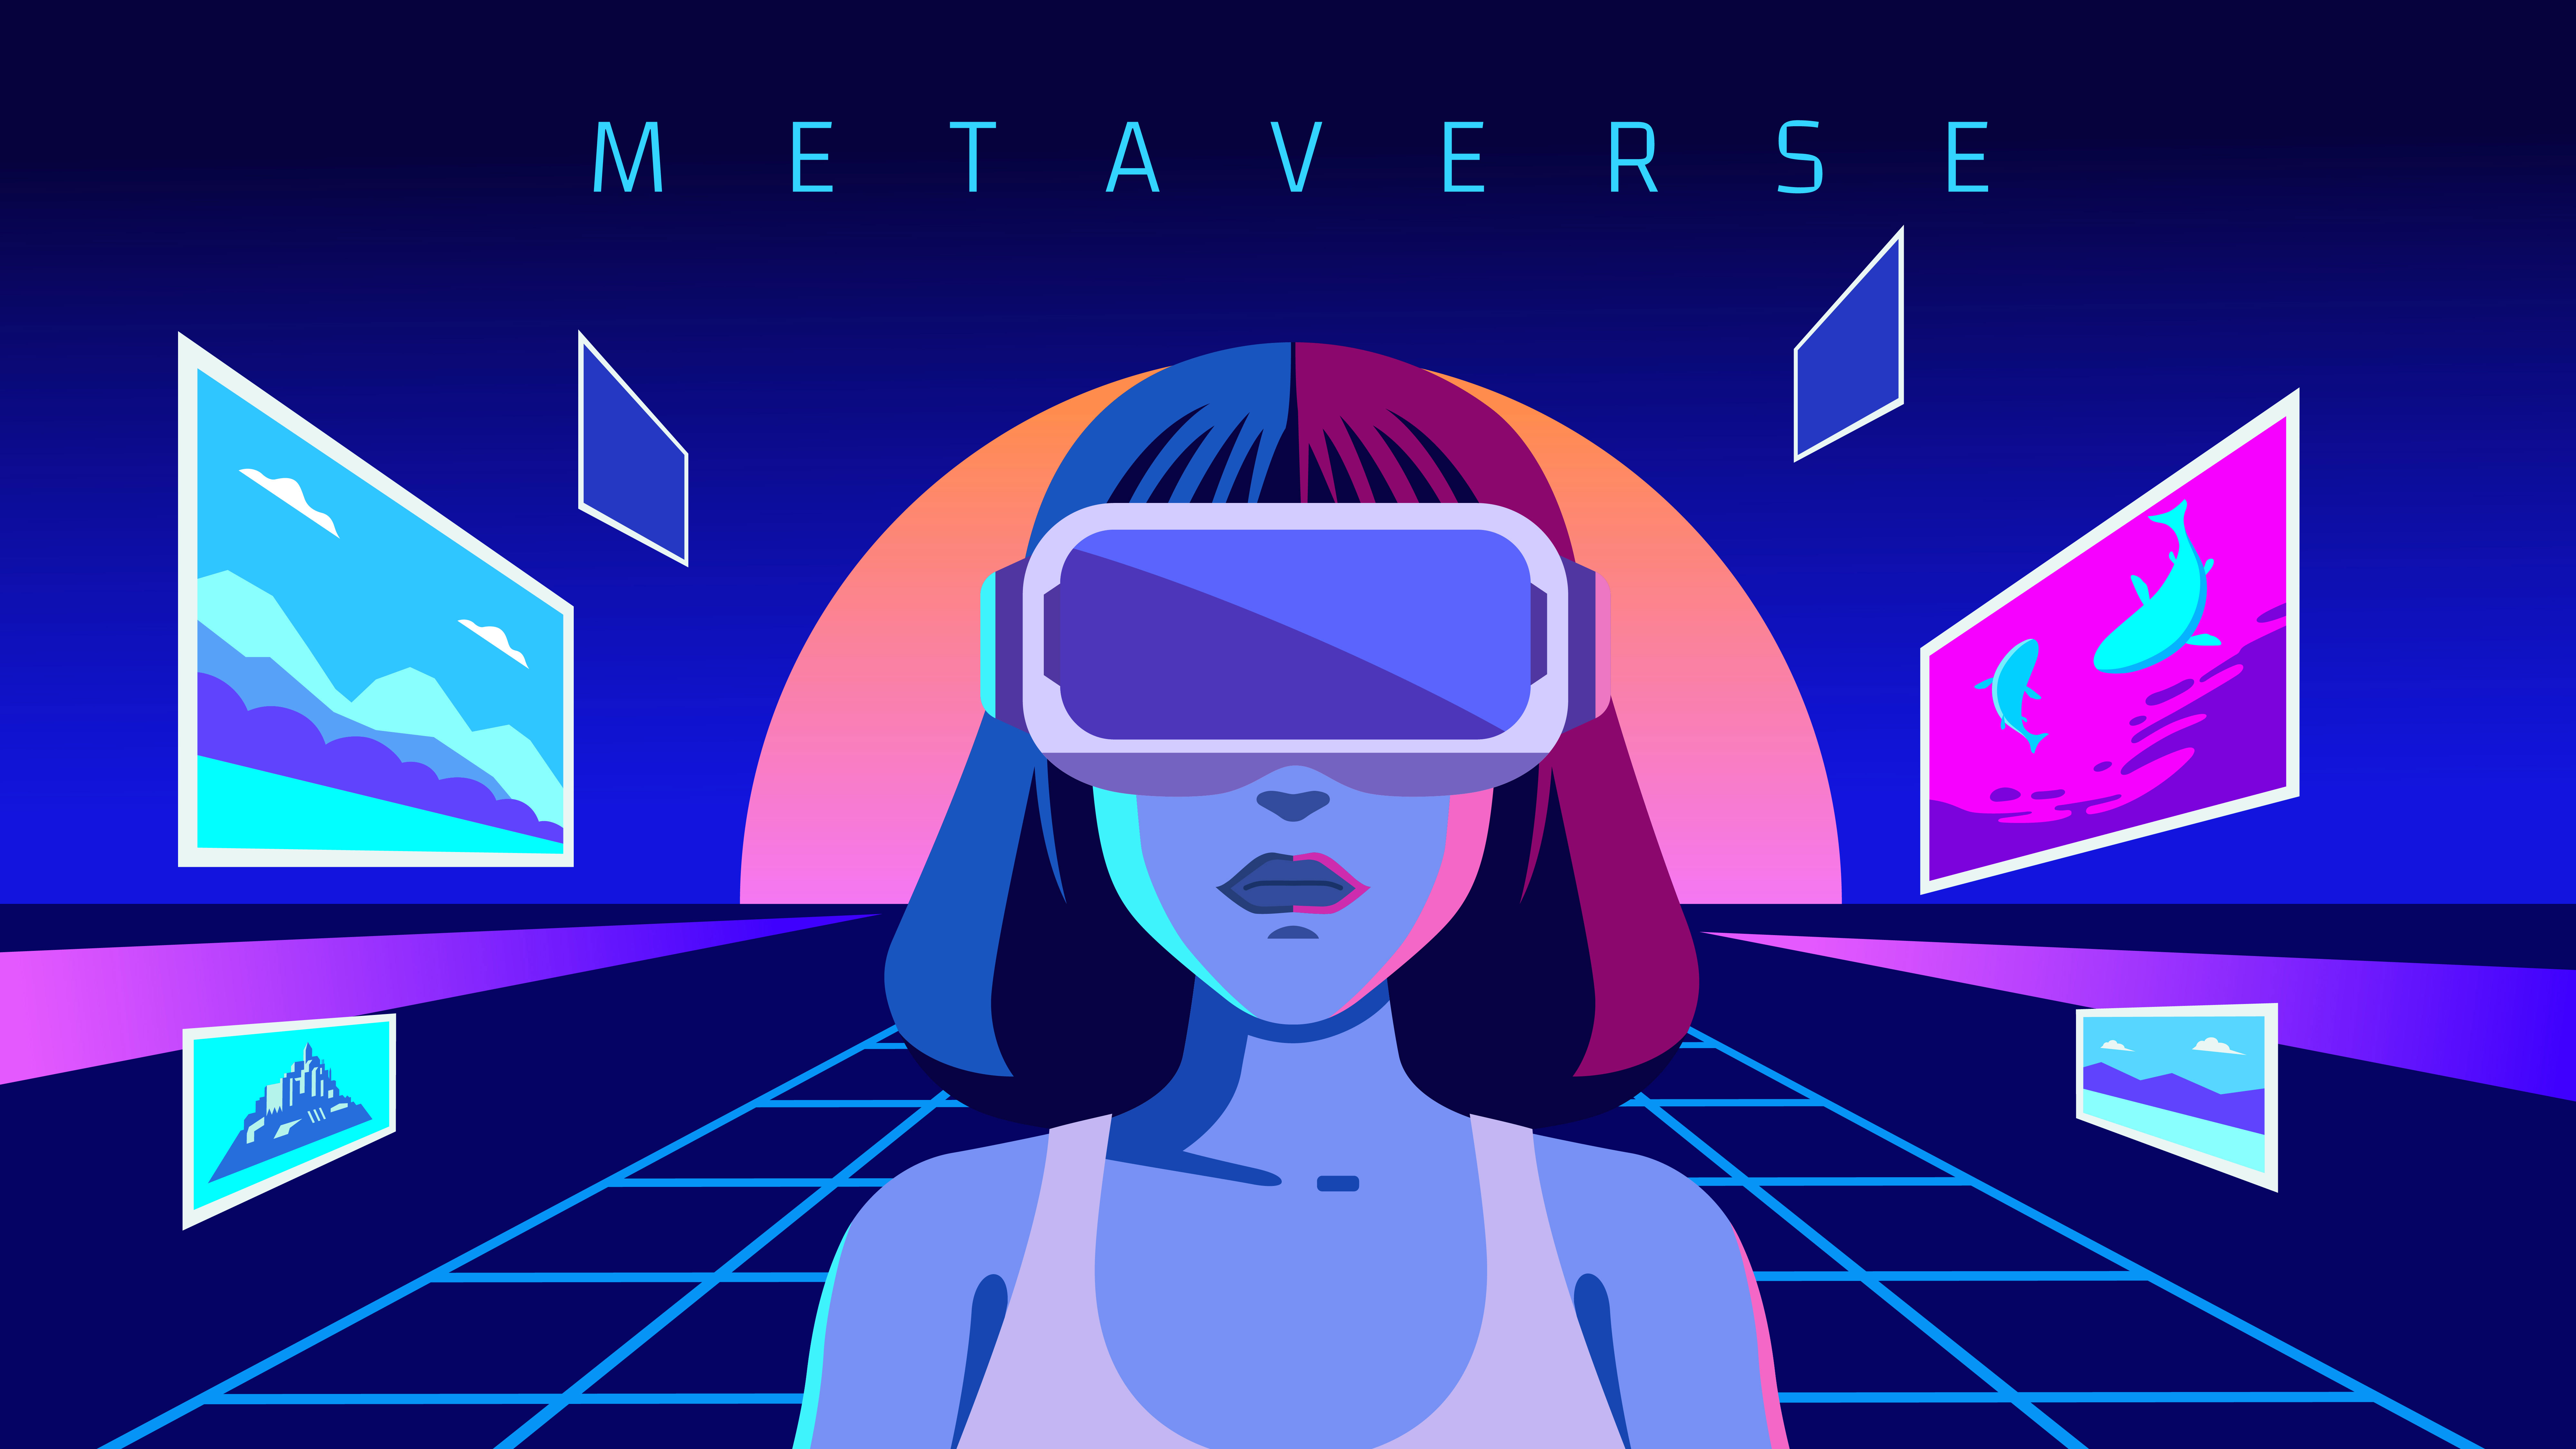 Metaverse: The next leap